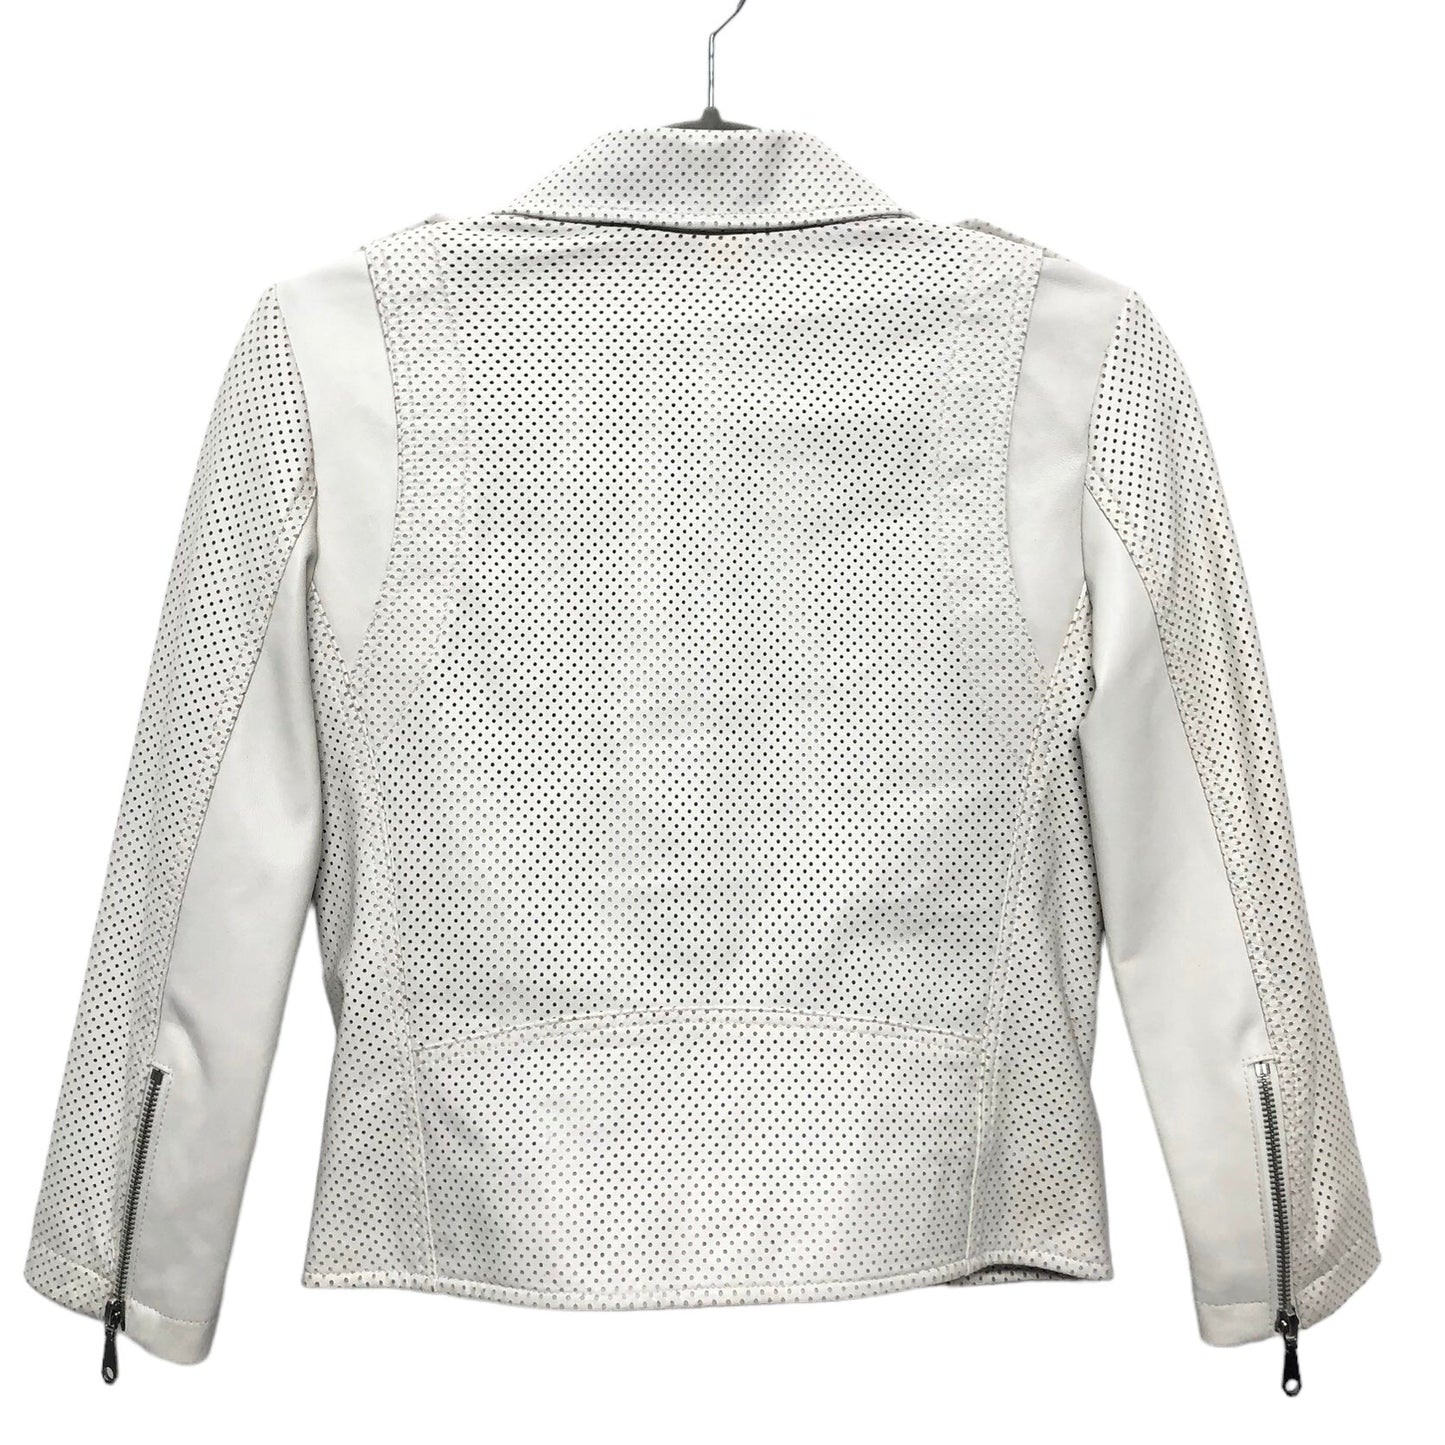 Jacket Designer By Rebecca Minkoff  Size: Xs